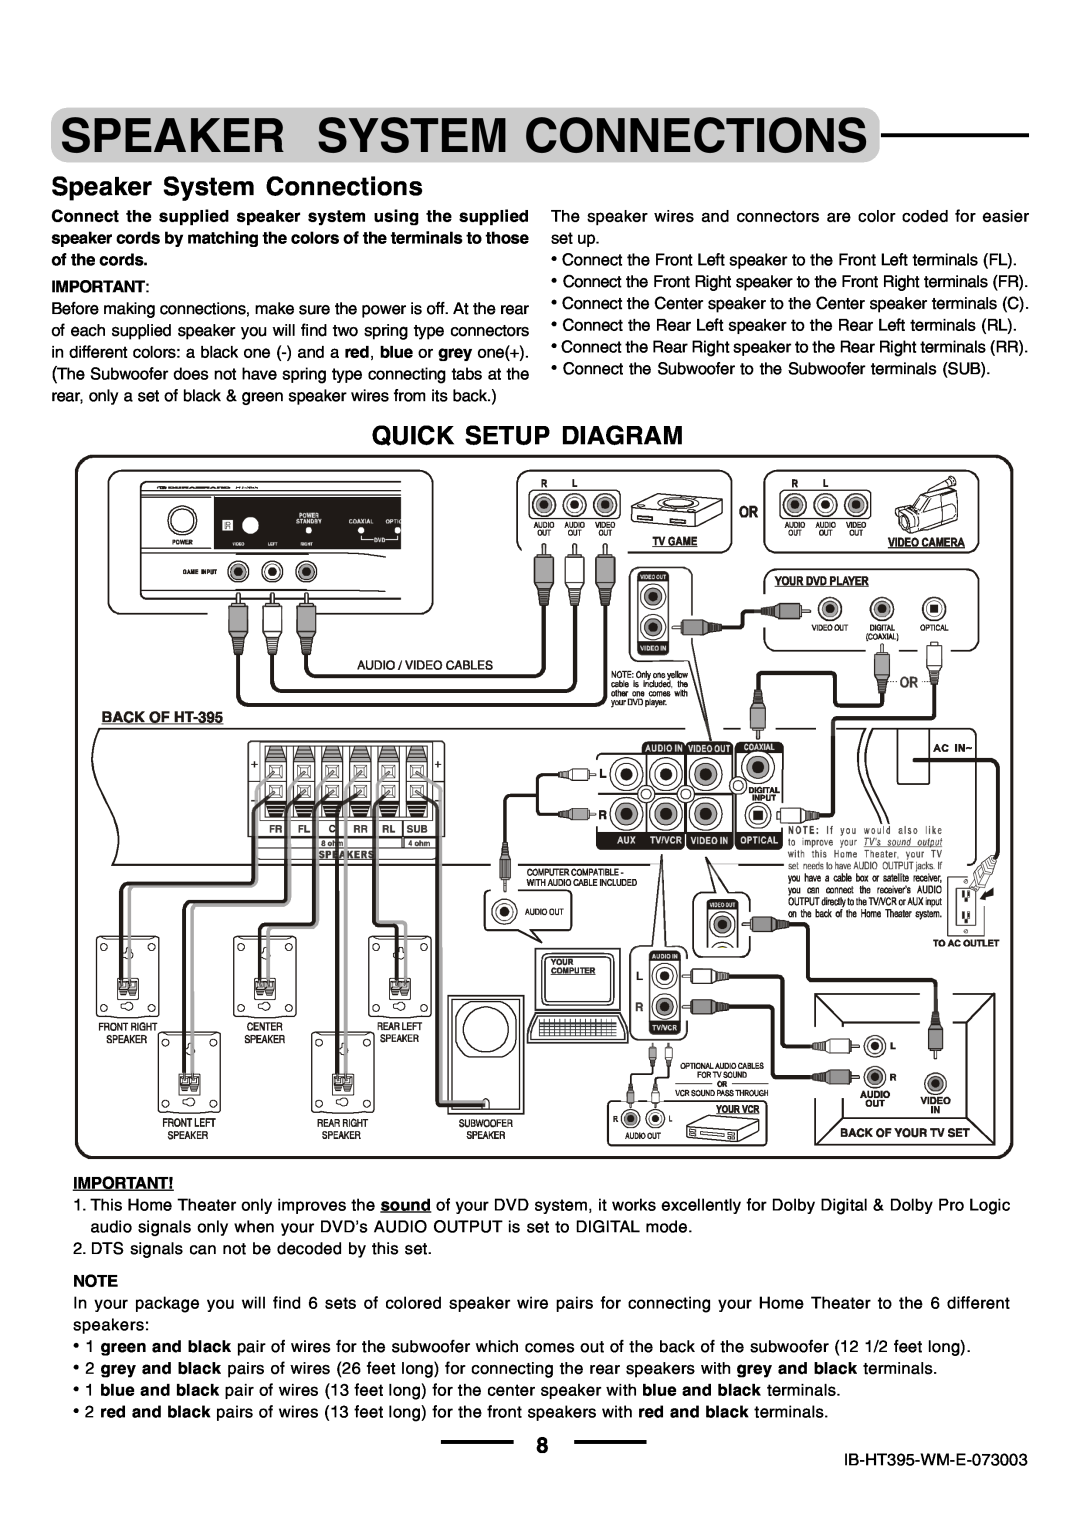 Lenoxx Electronics HT-395 manual Speaker System Connections, Quick Setup Diagram 